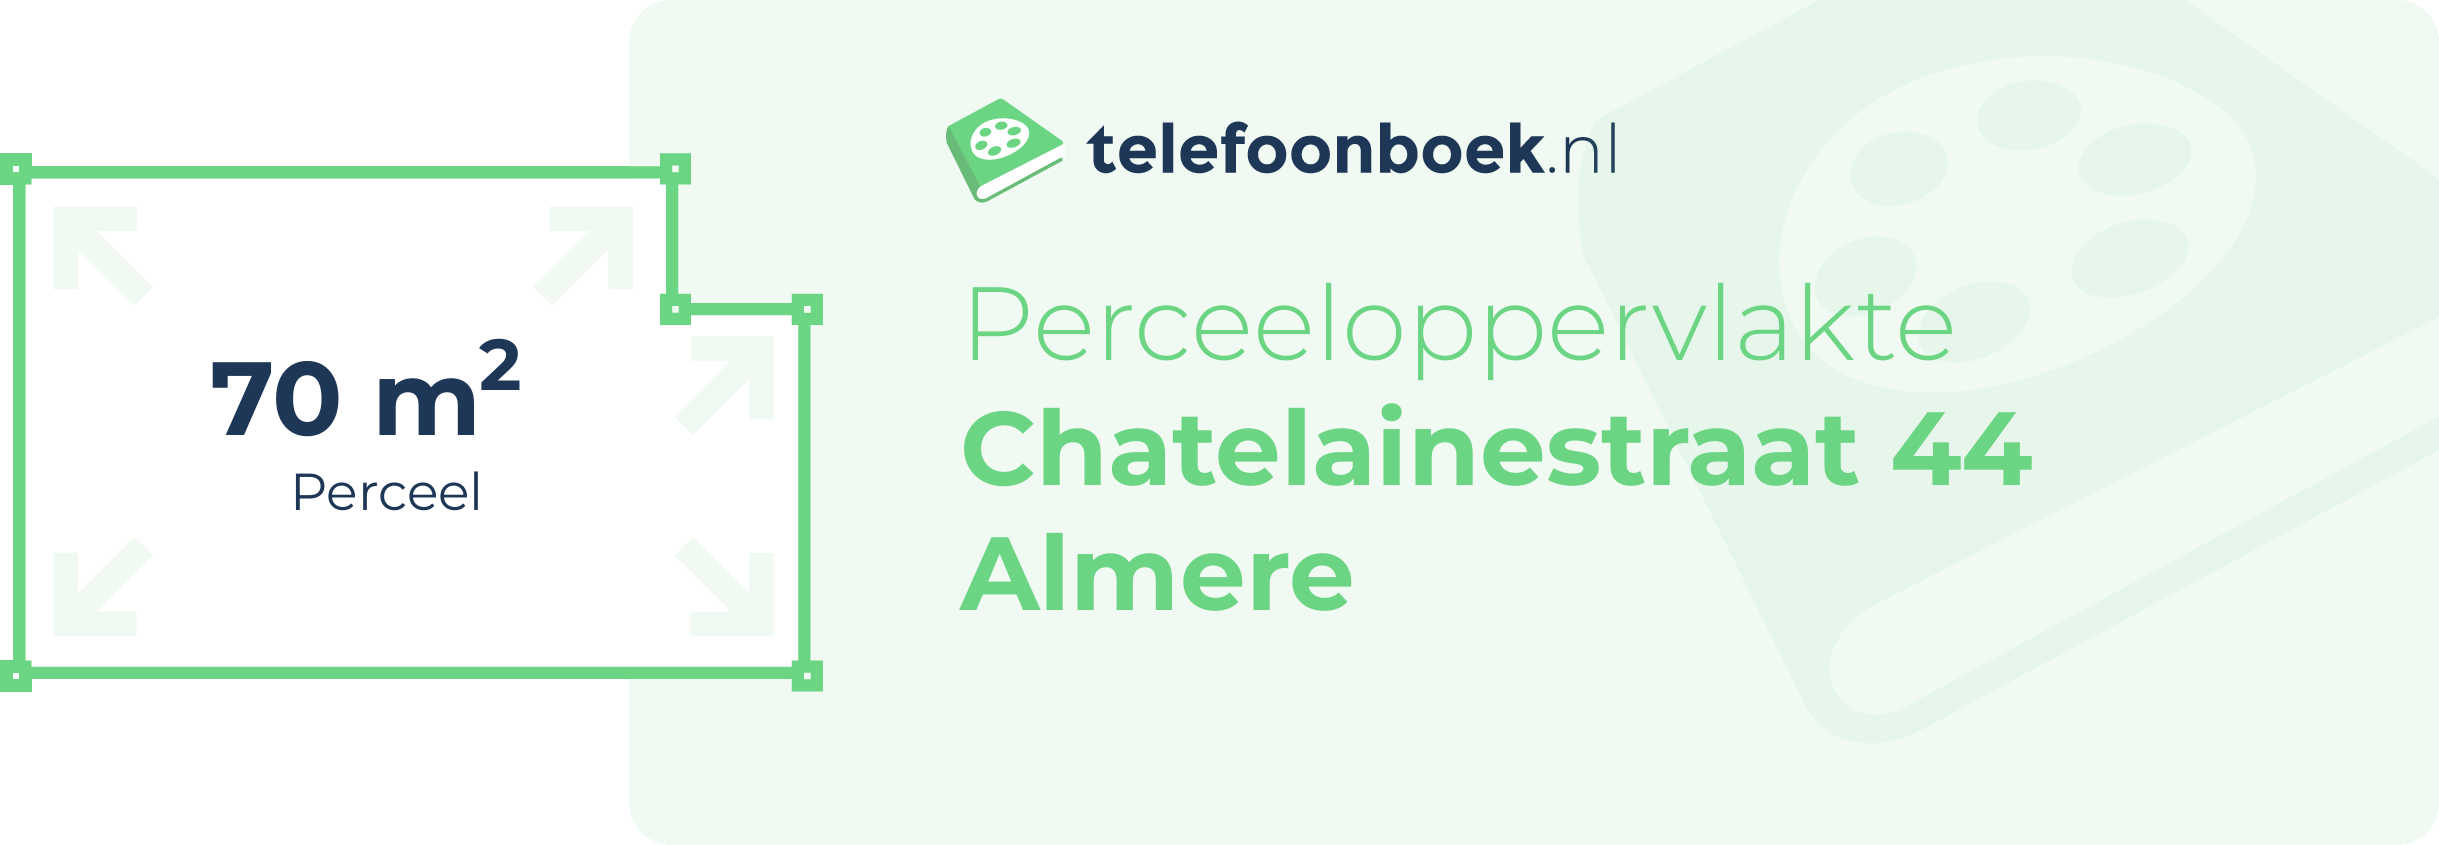 Perceeloppervlakte Chatelainestraat 44 Almere